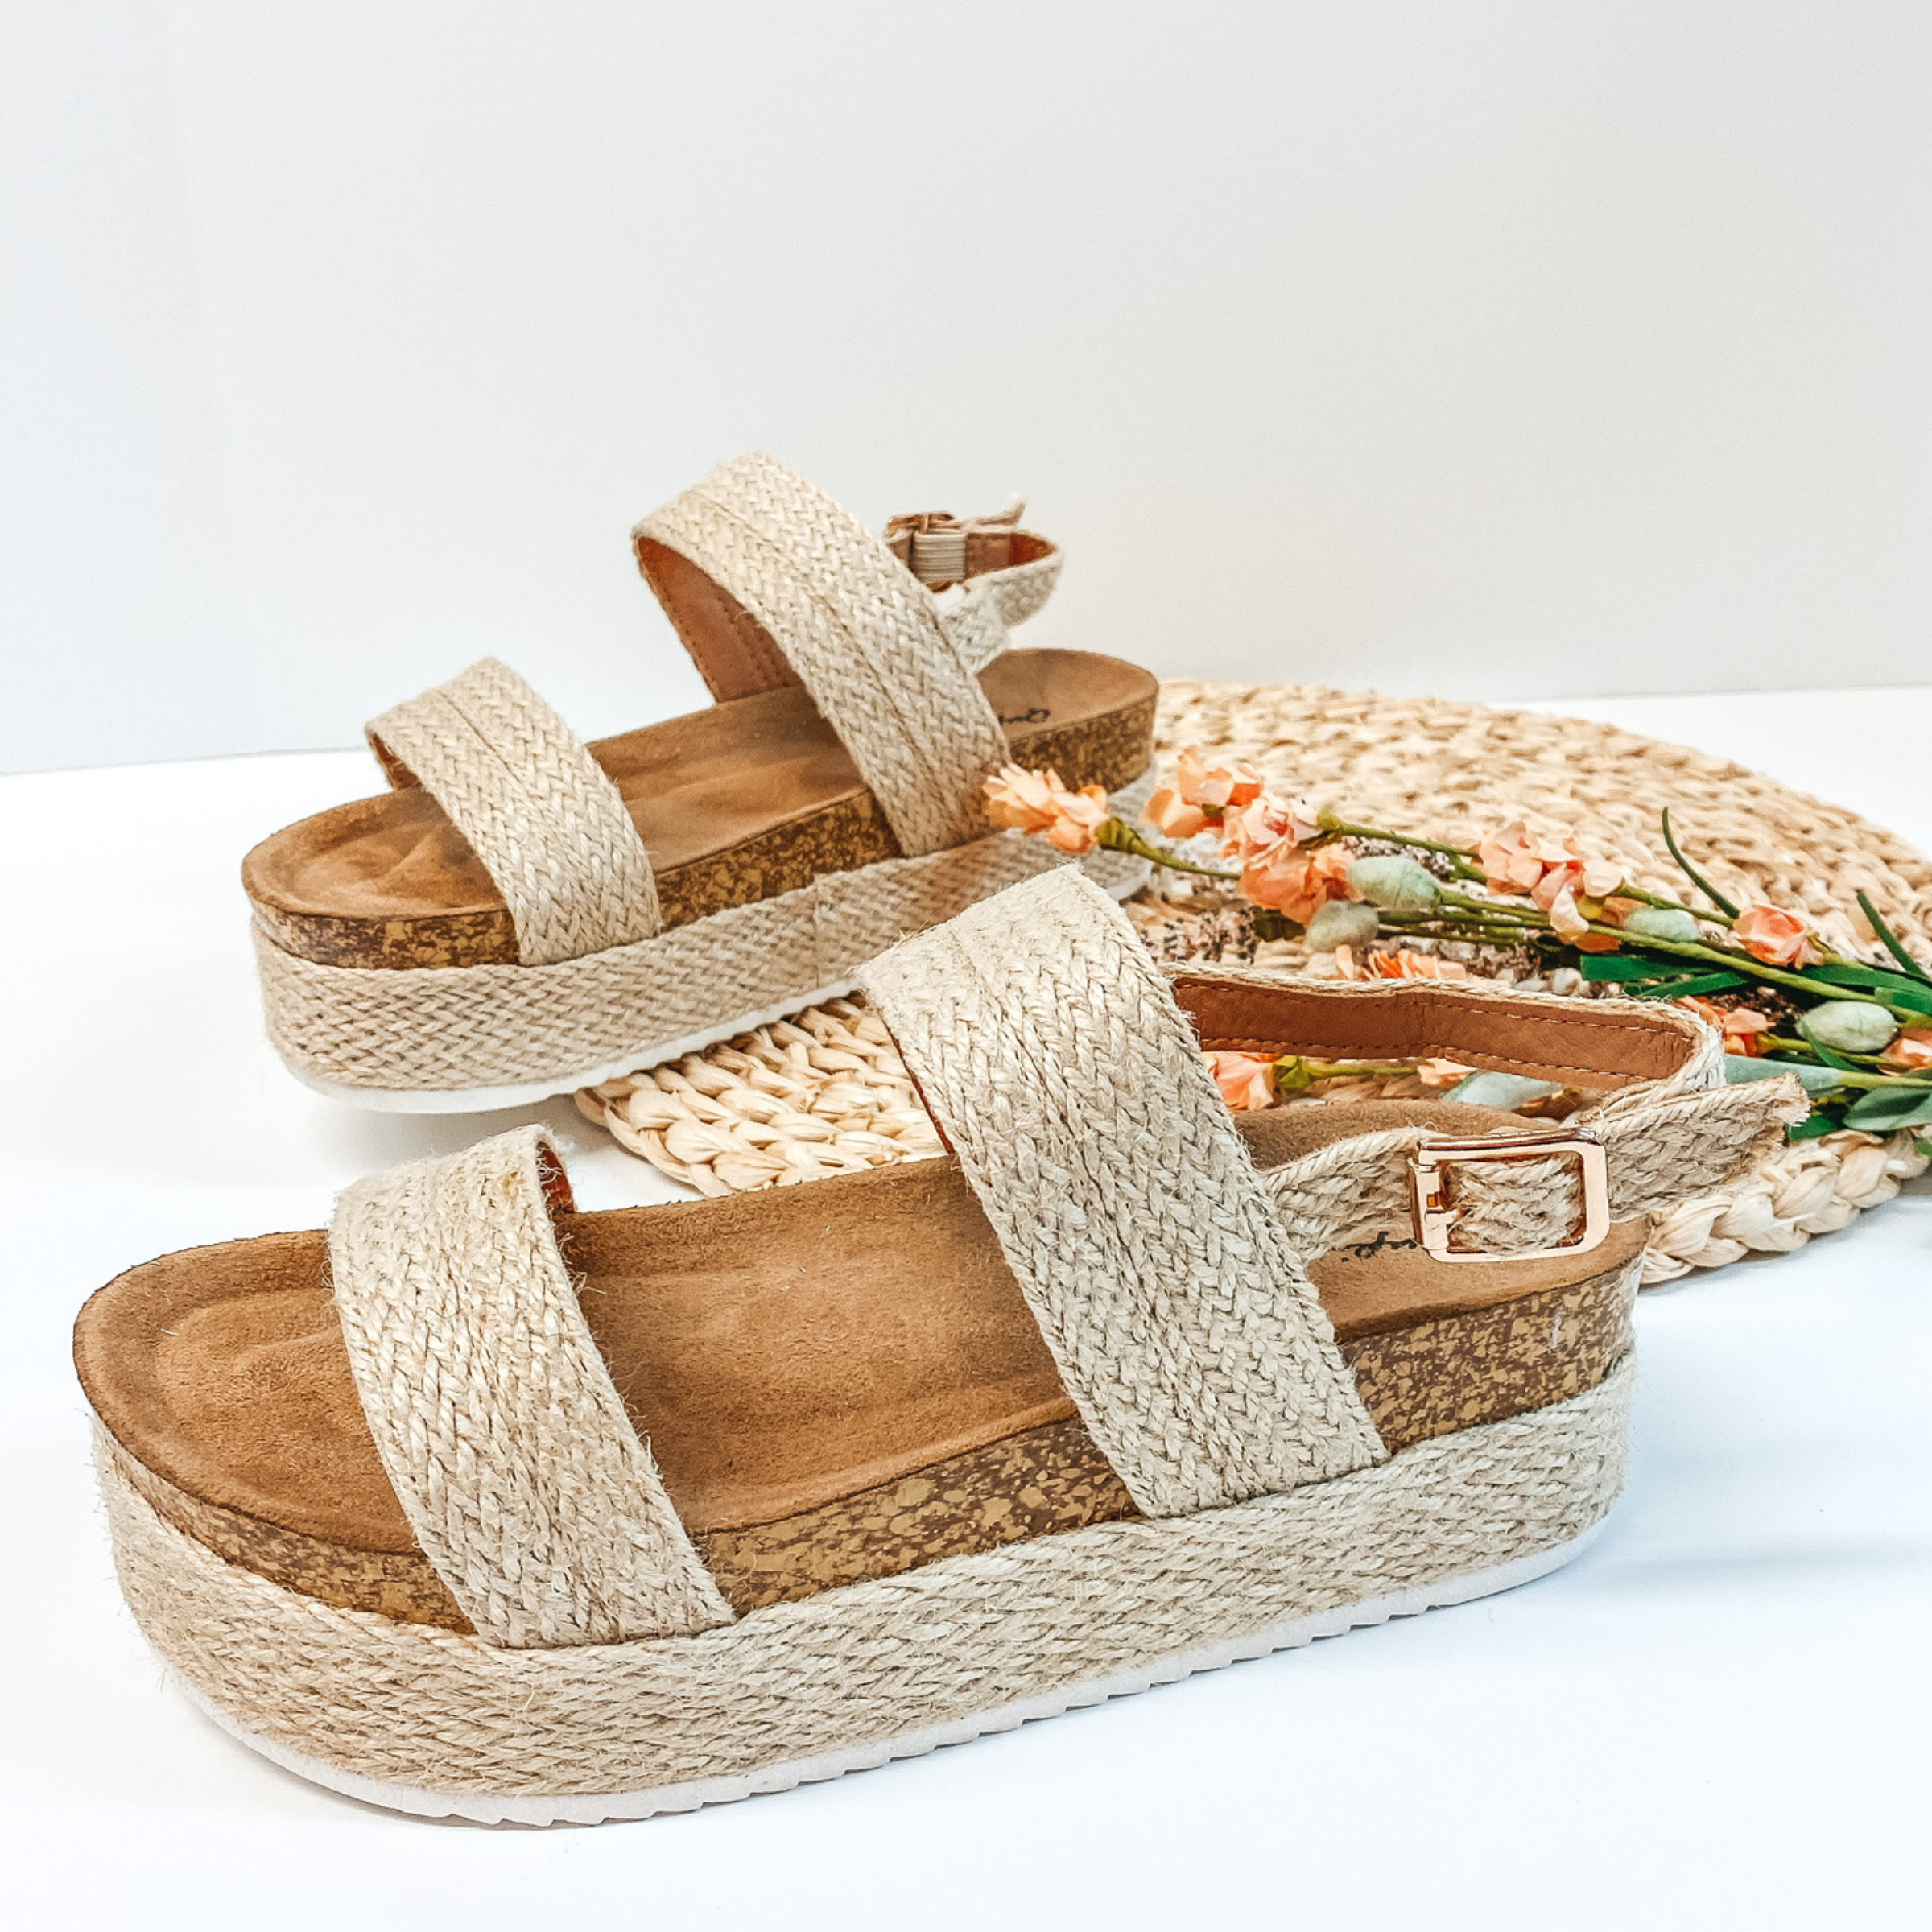 Best Foot Forward Platform Espadrille Sandals in Beige - Giddy Up Glamour Boutique